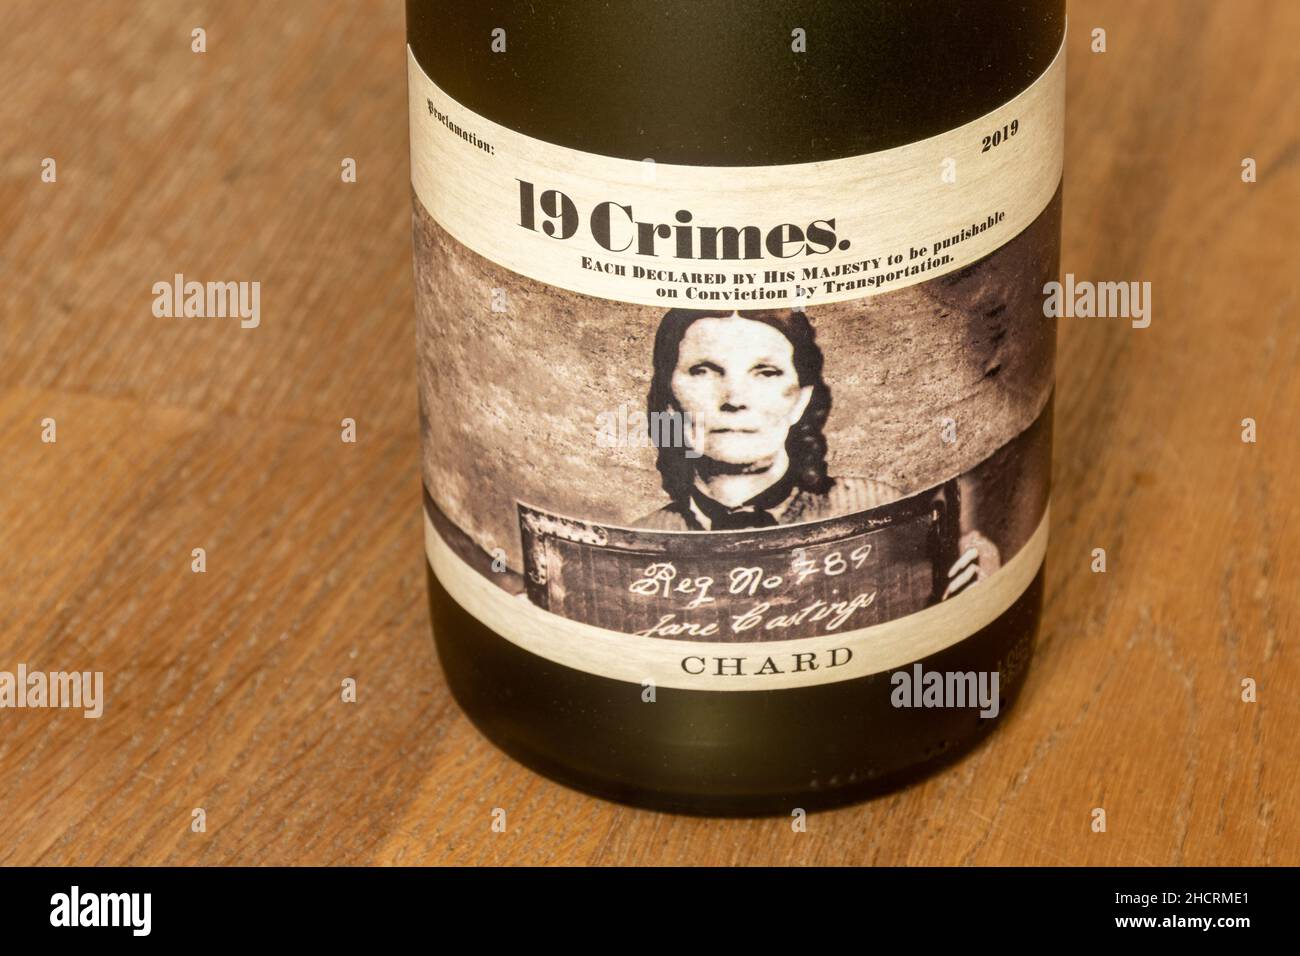 Bottle of 19 Crimes Australian wine (nineteen crimes), white wine, Chardonnay Stock Photo